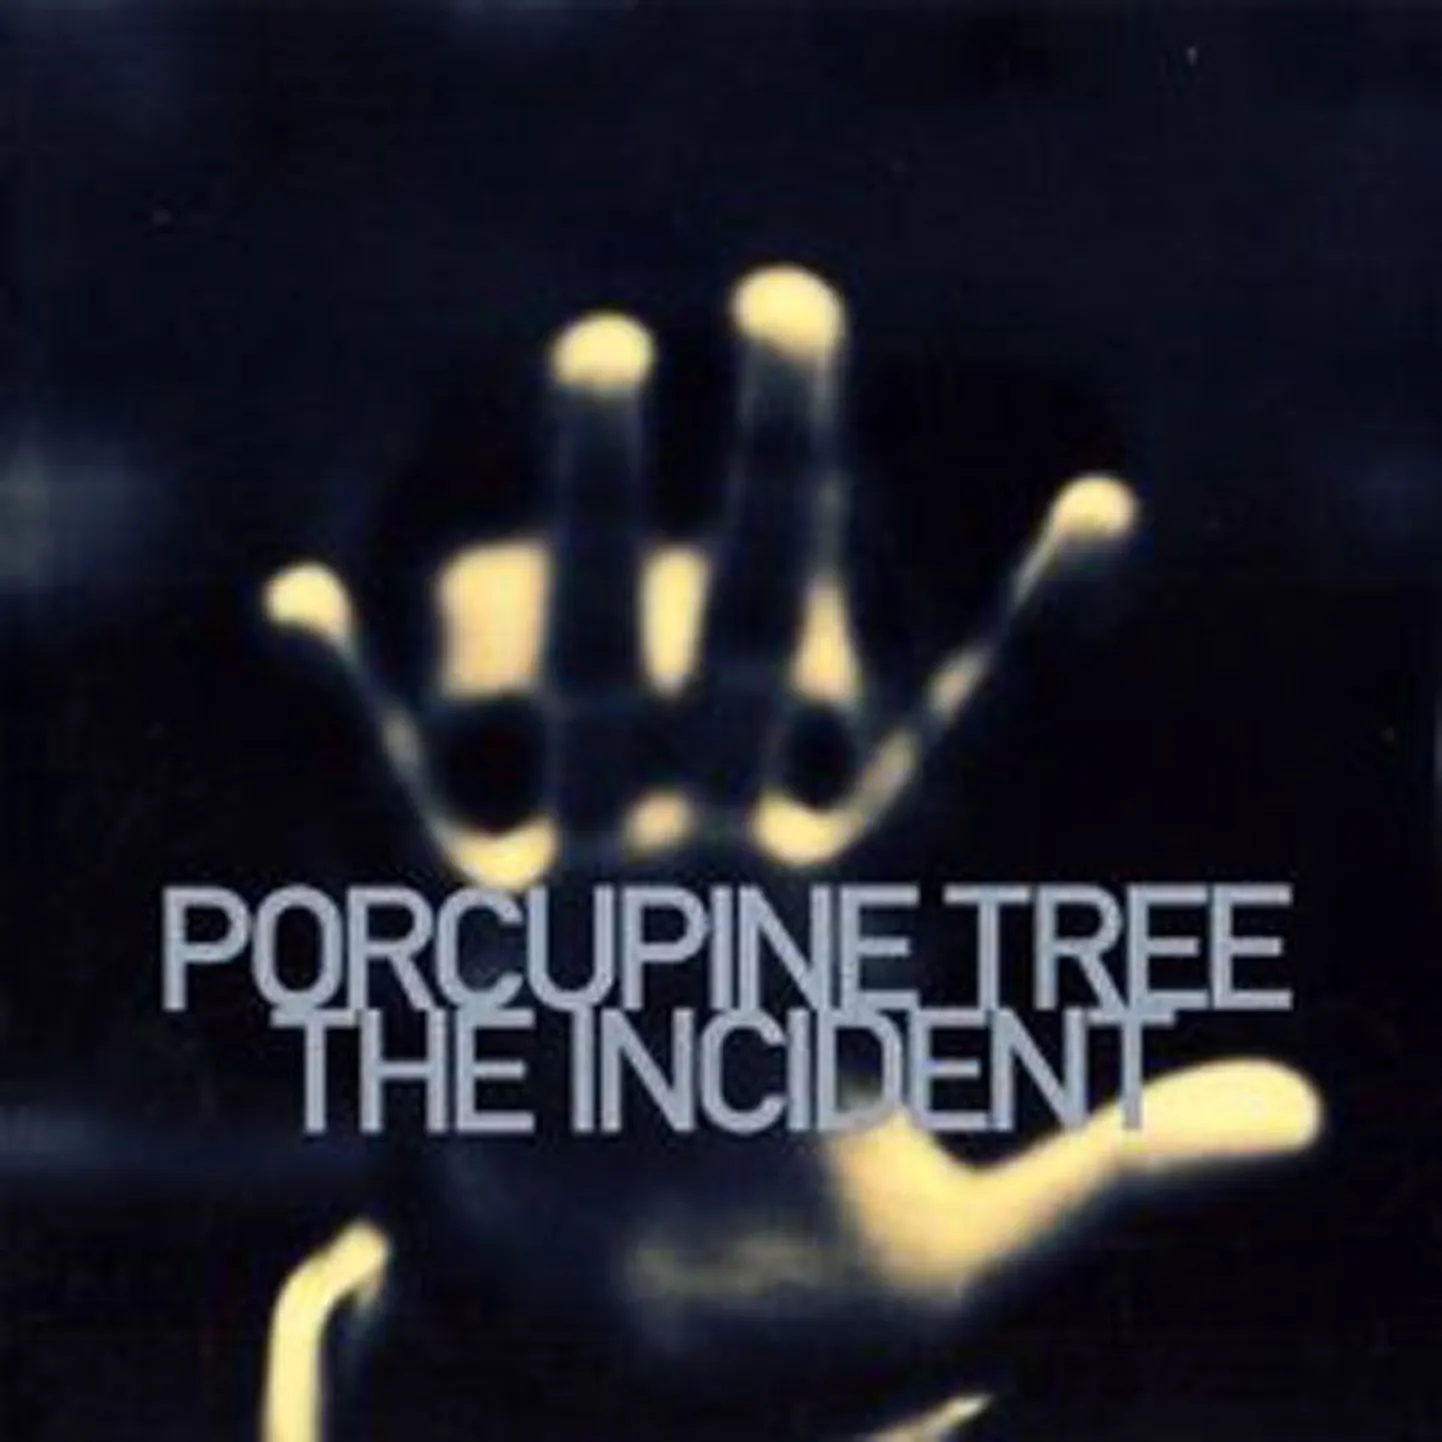 Porcupine Tree
The Incident (Roadrunner)